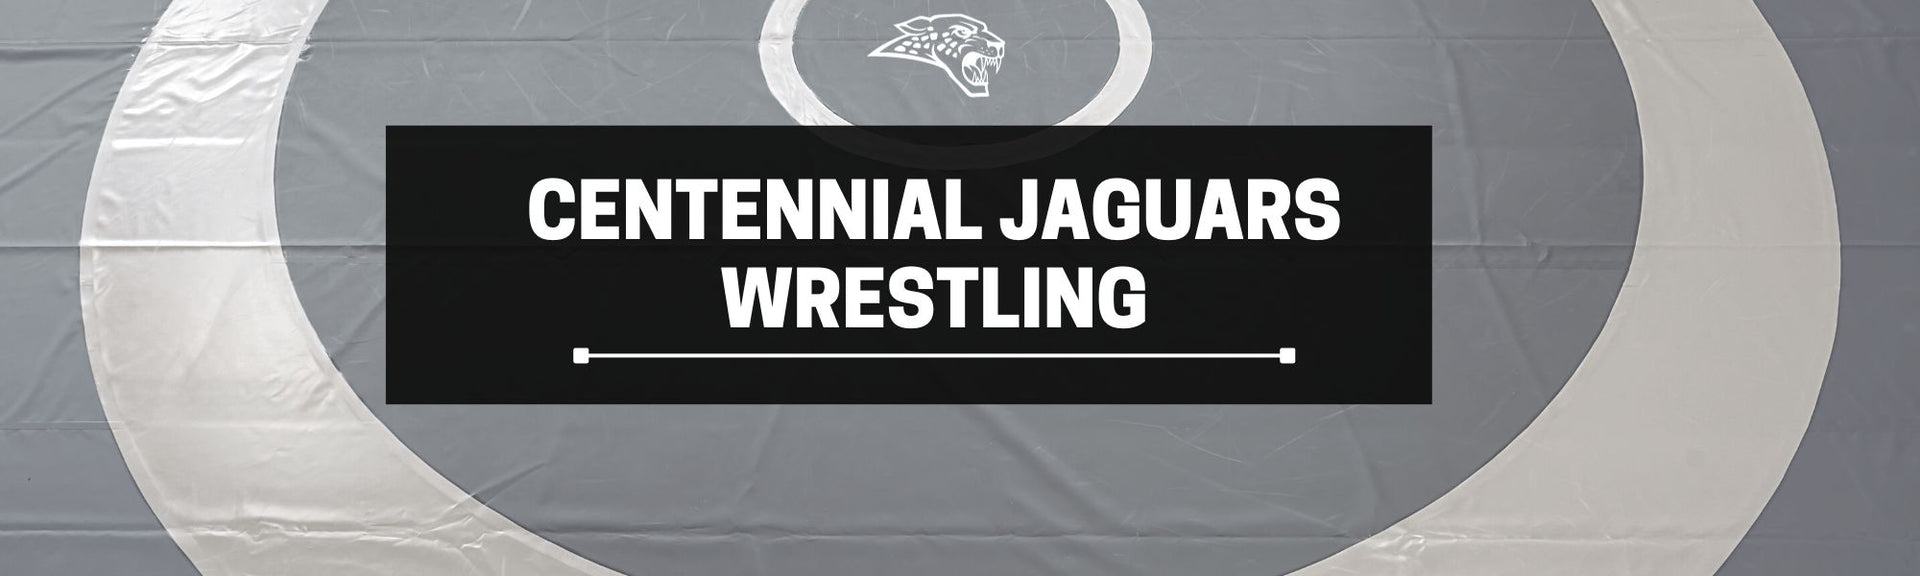 Centennial Jaguar Wrestling Collection